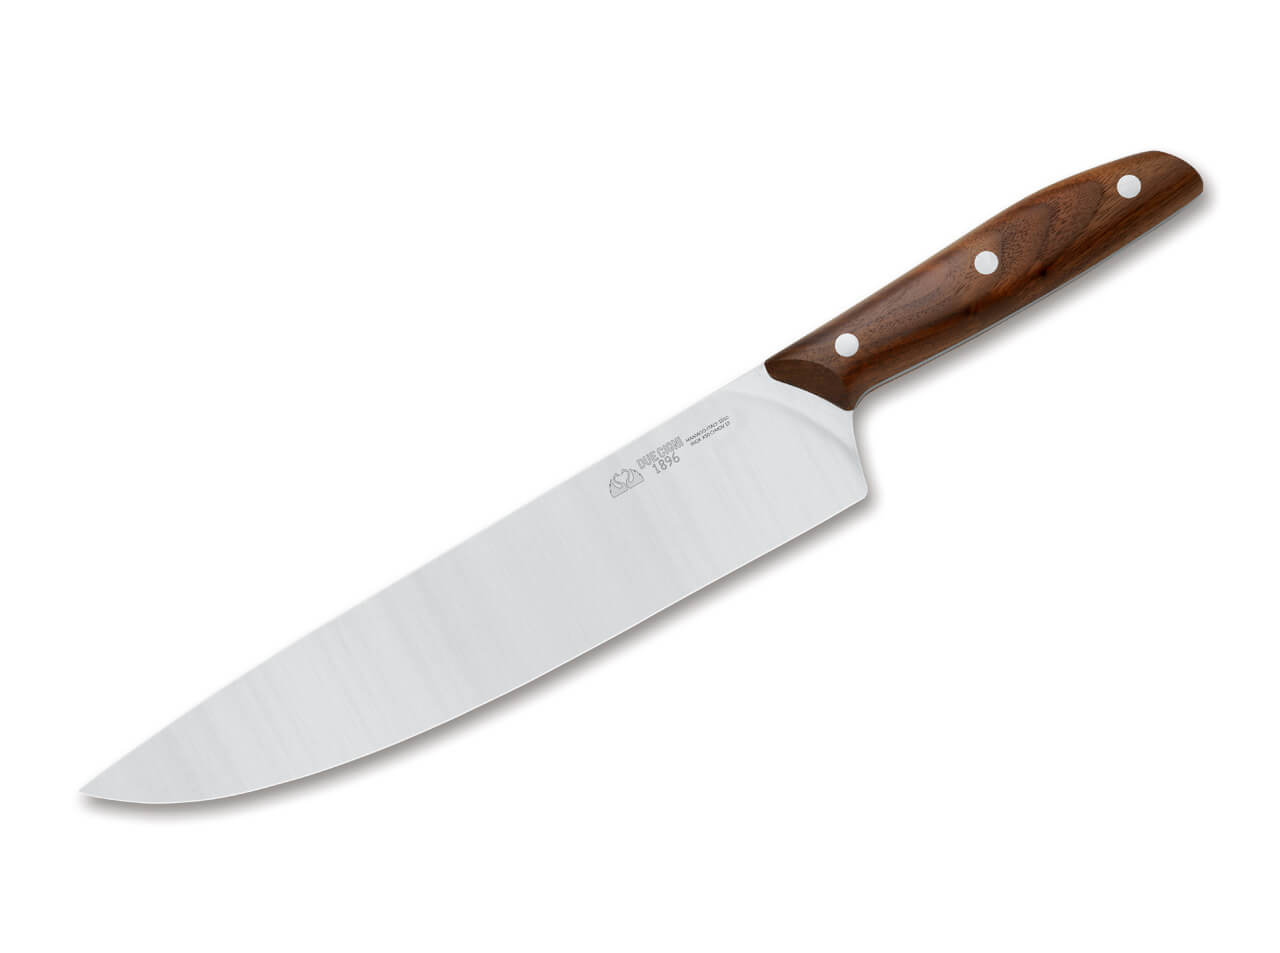 https://www.bokerusa.com/media/image/ea/b4/36/due-cigni-1896-chef-s-knife-large-walnut-03dc113.jpg